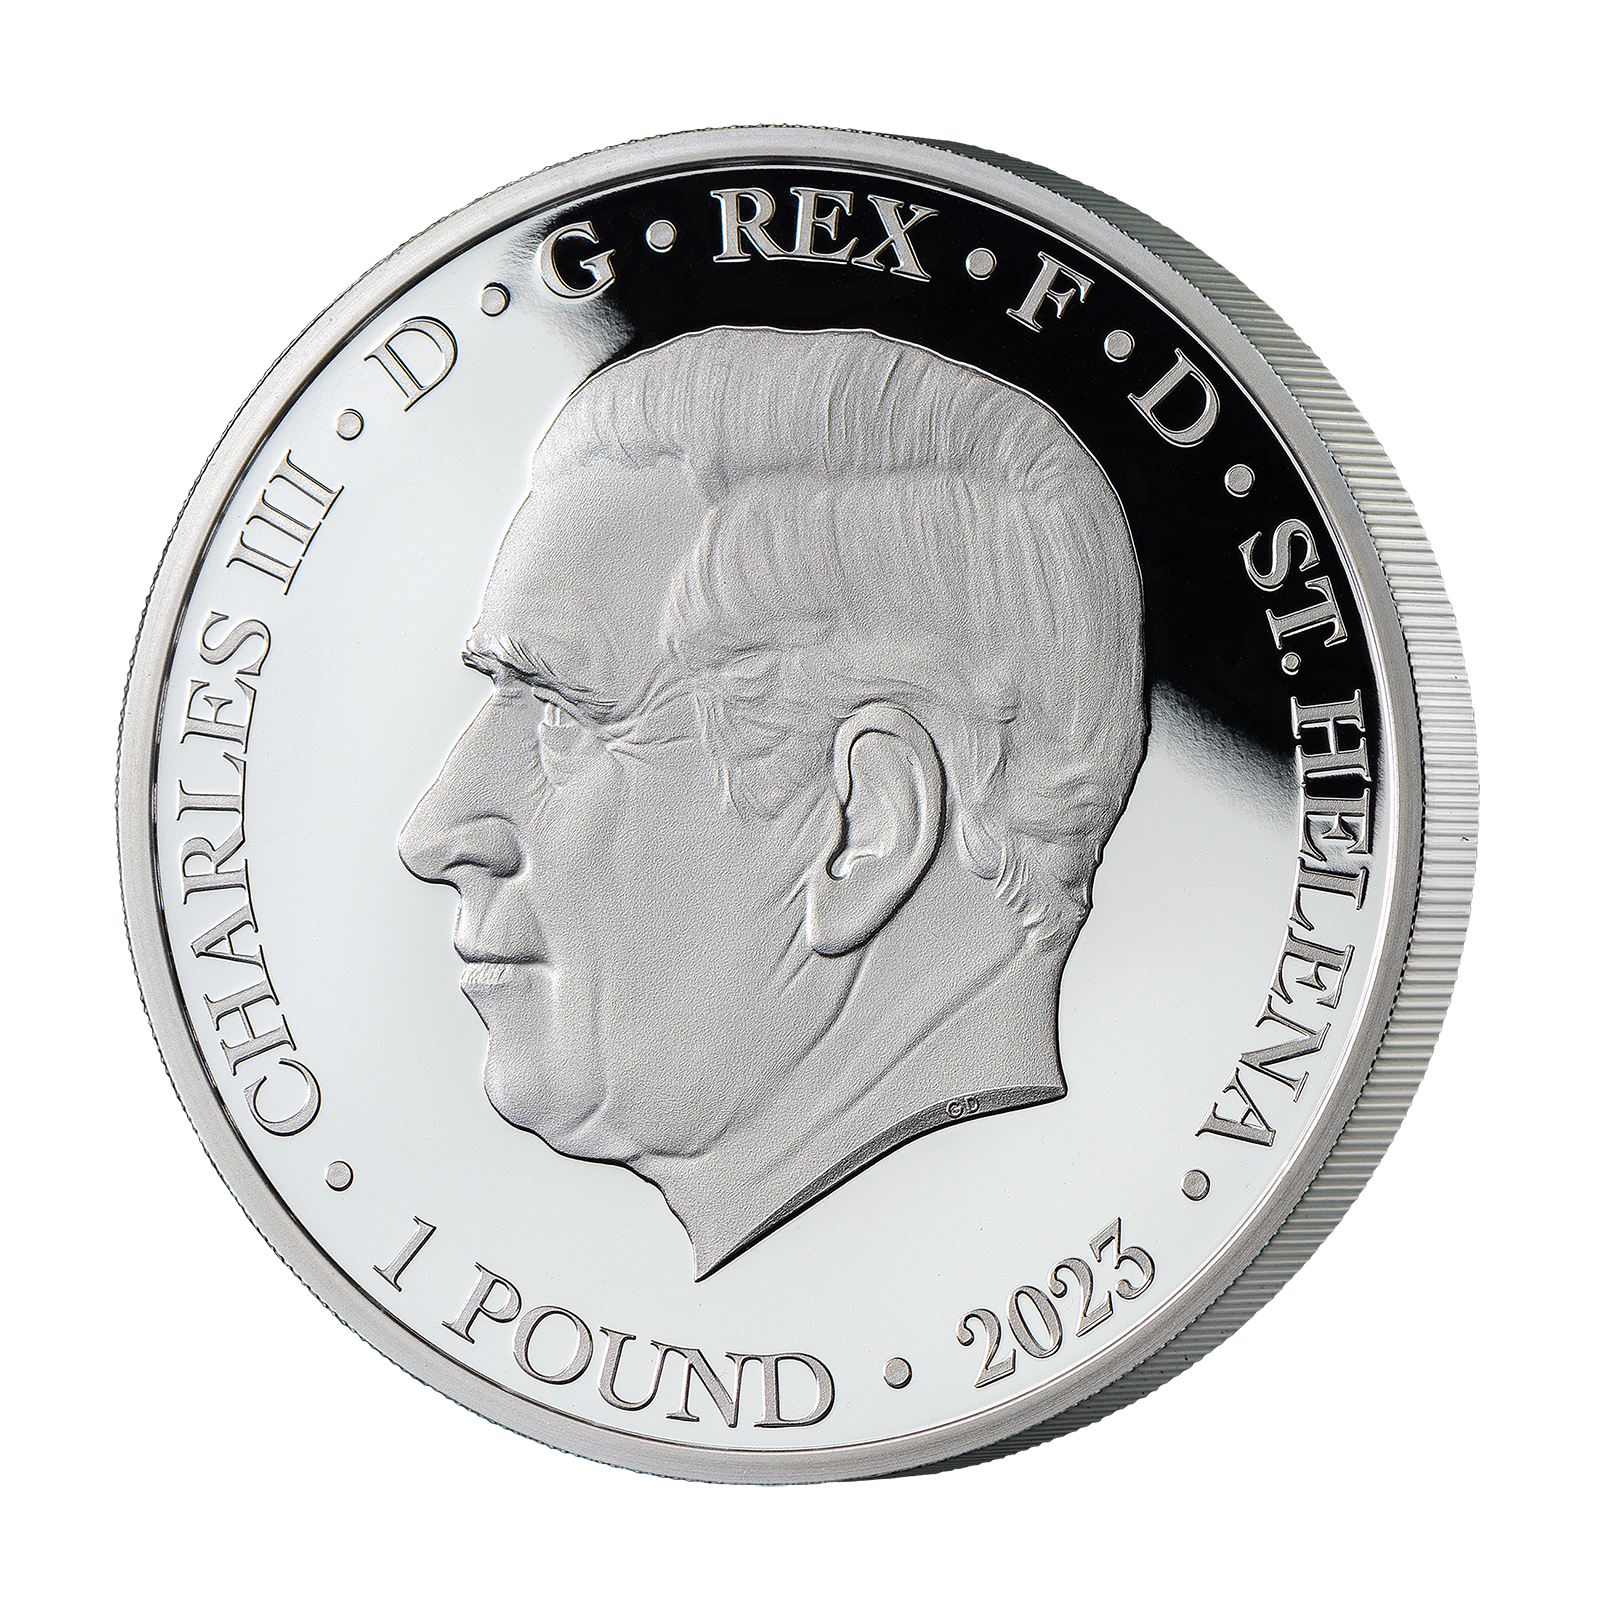 2023 Boston Tea Party 250th Anniversary 1oz Silver Proof Coin